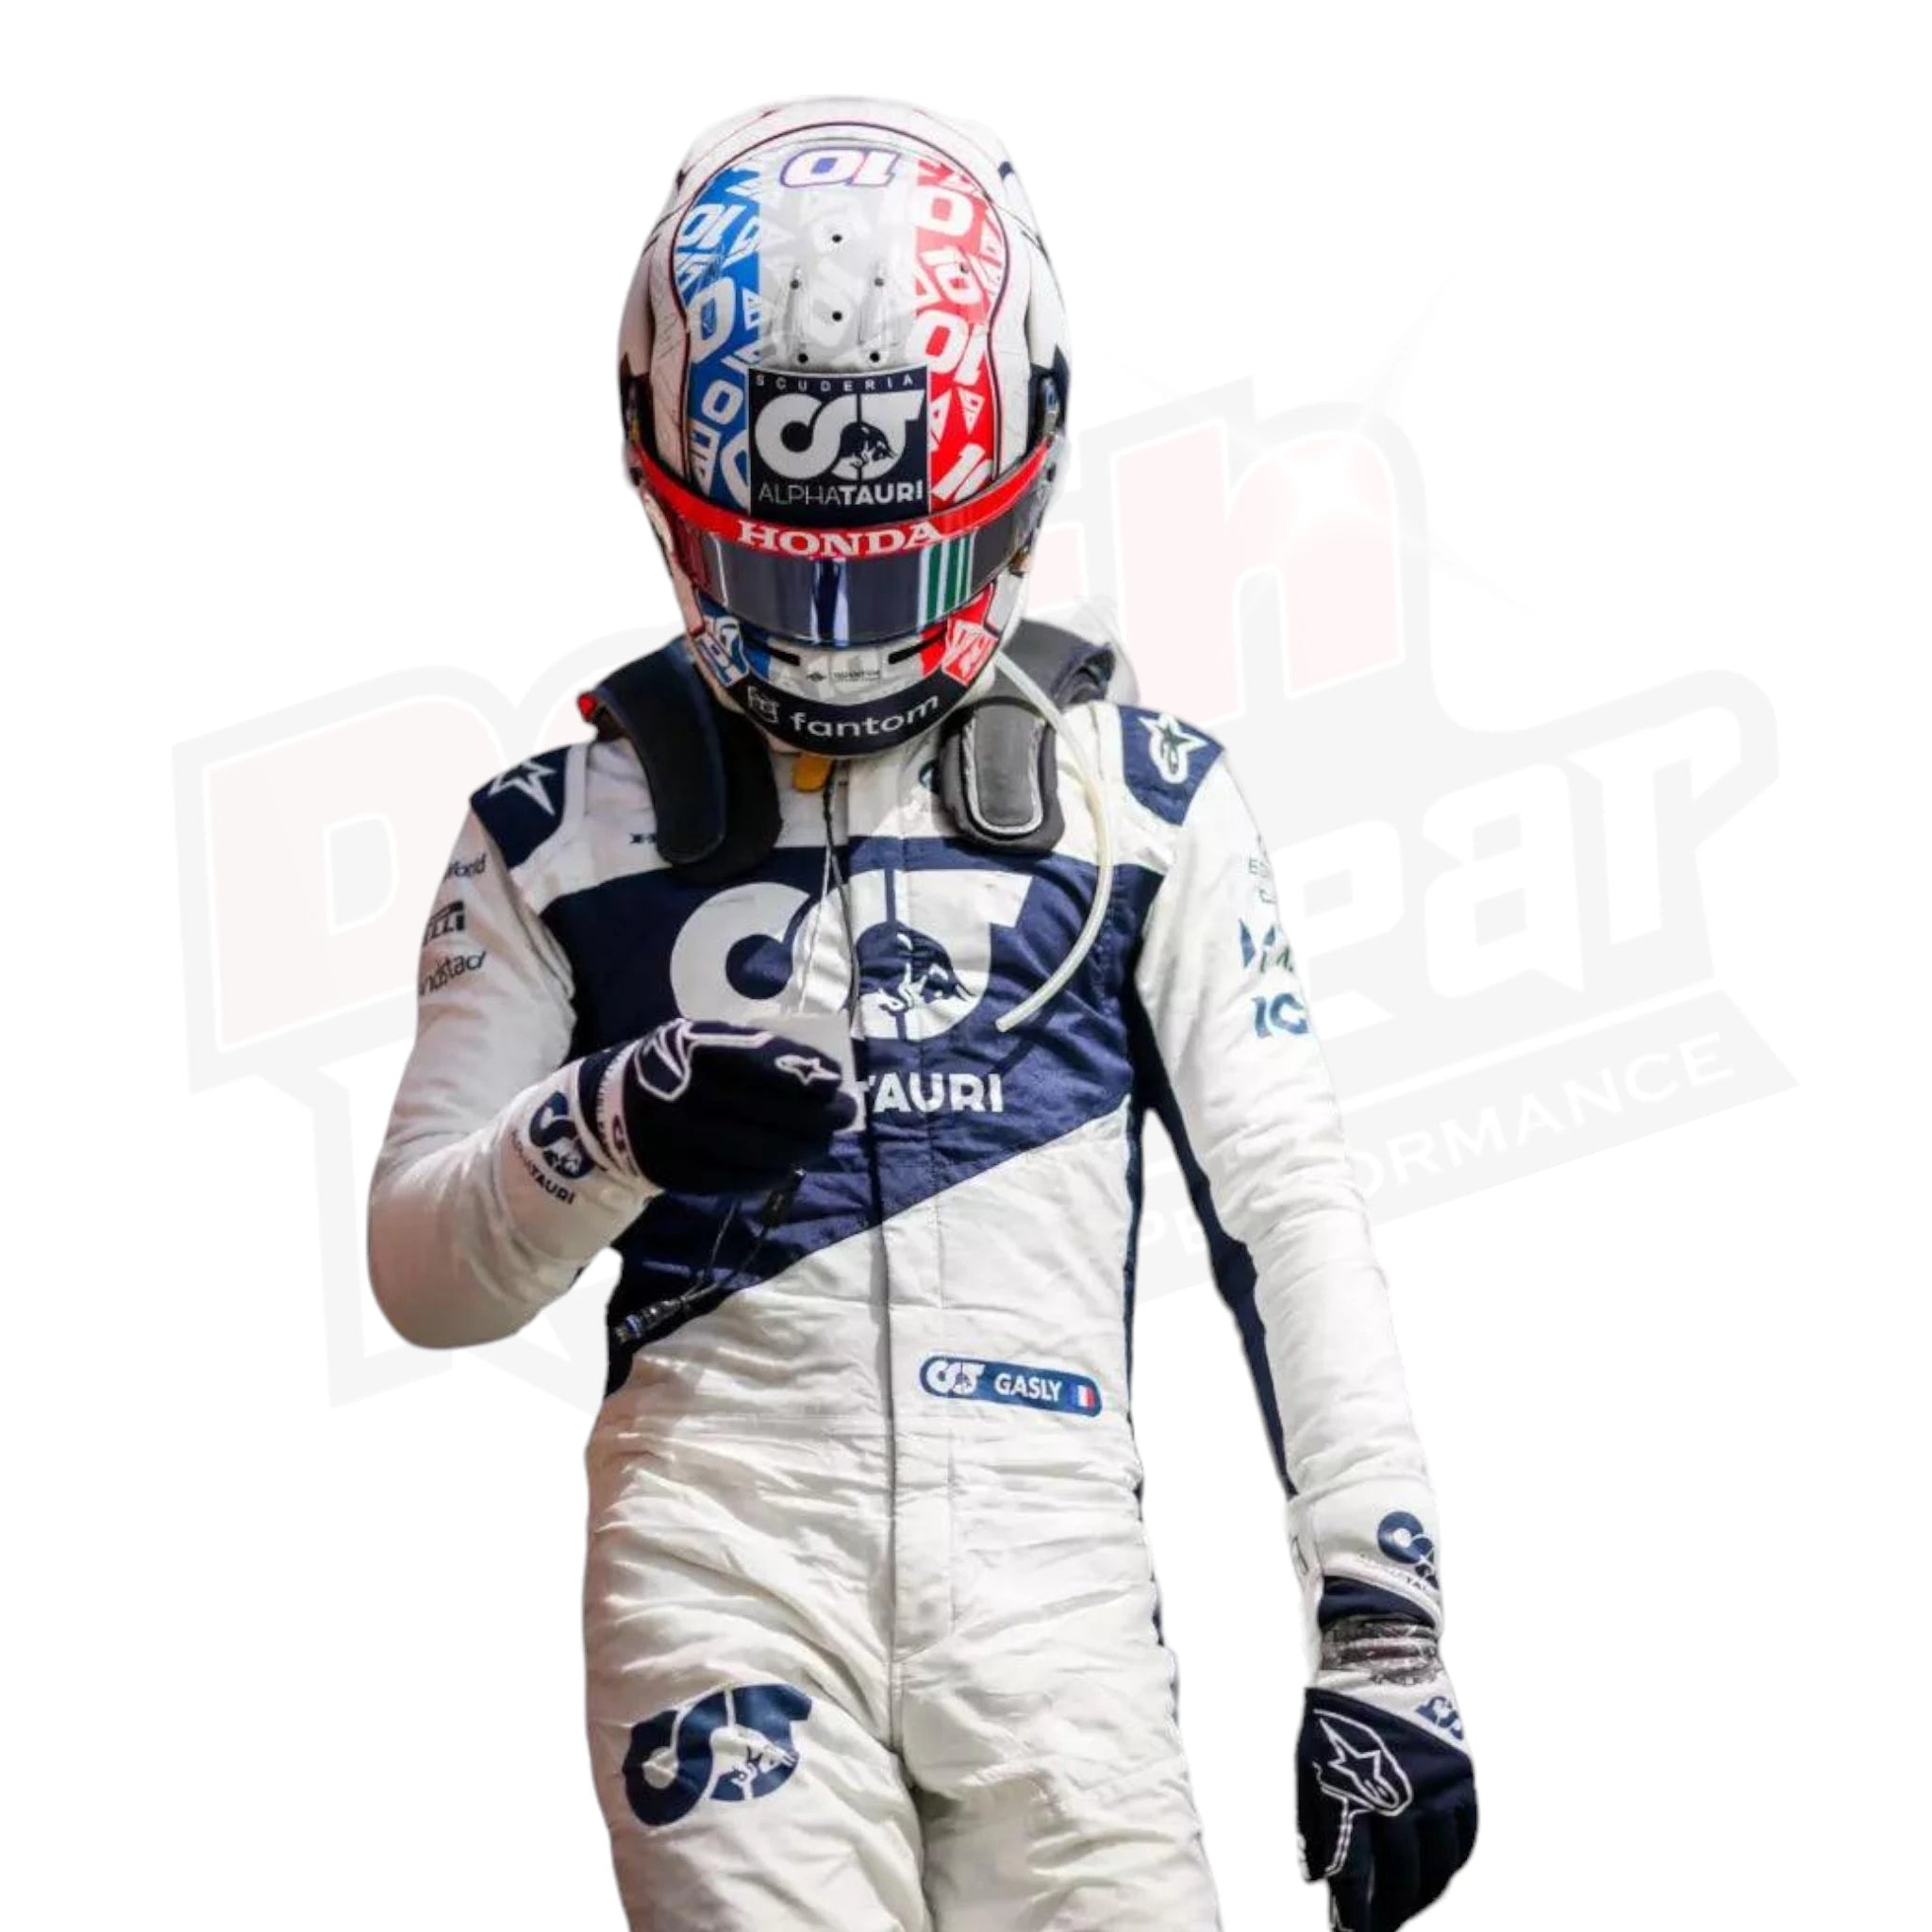 2021 AlphaTauri Pierre Gasly F1 Race Suit